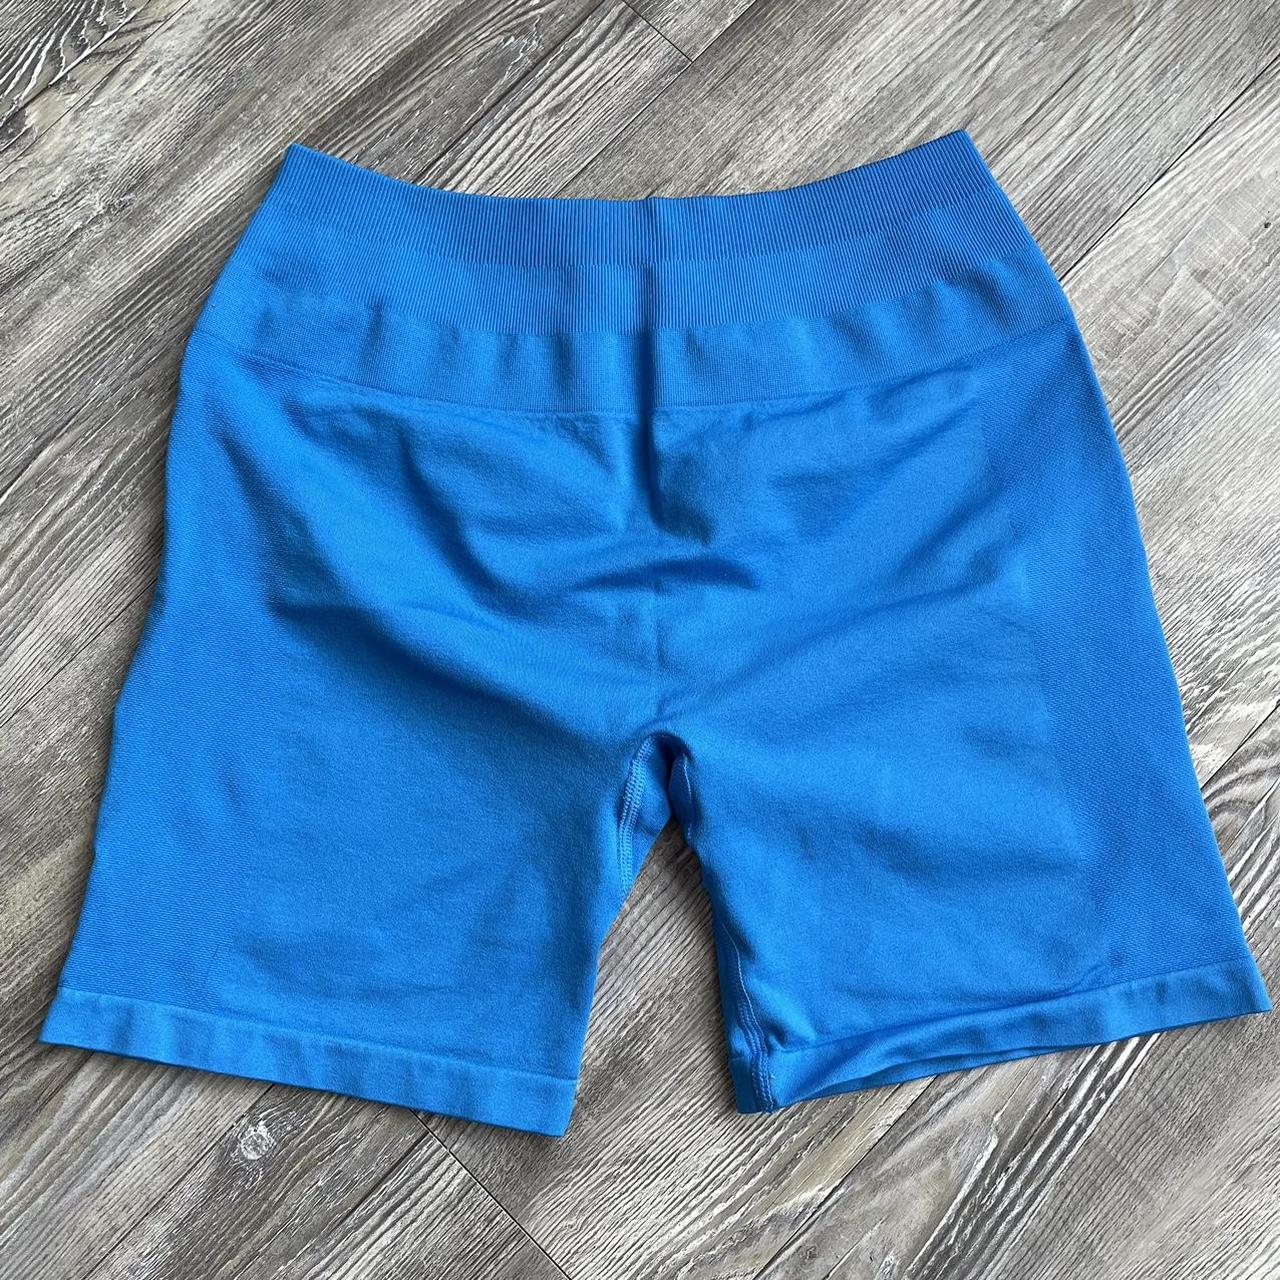 AUROLA Intensify Workout shorts in diva blue - Depop